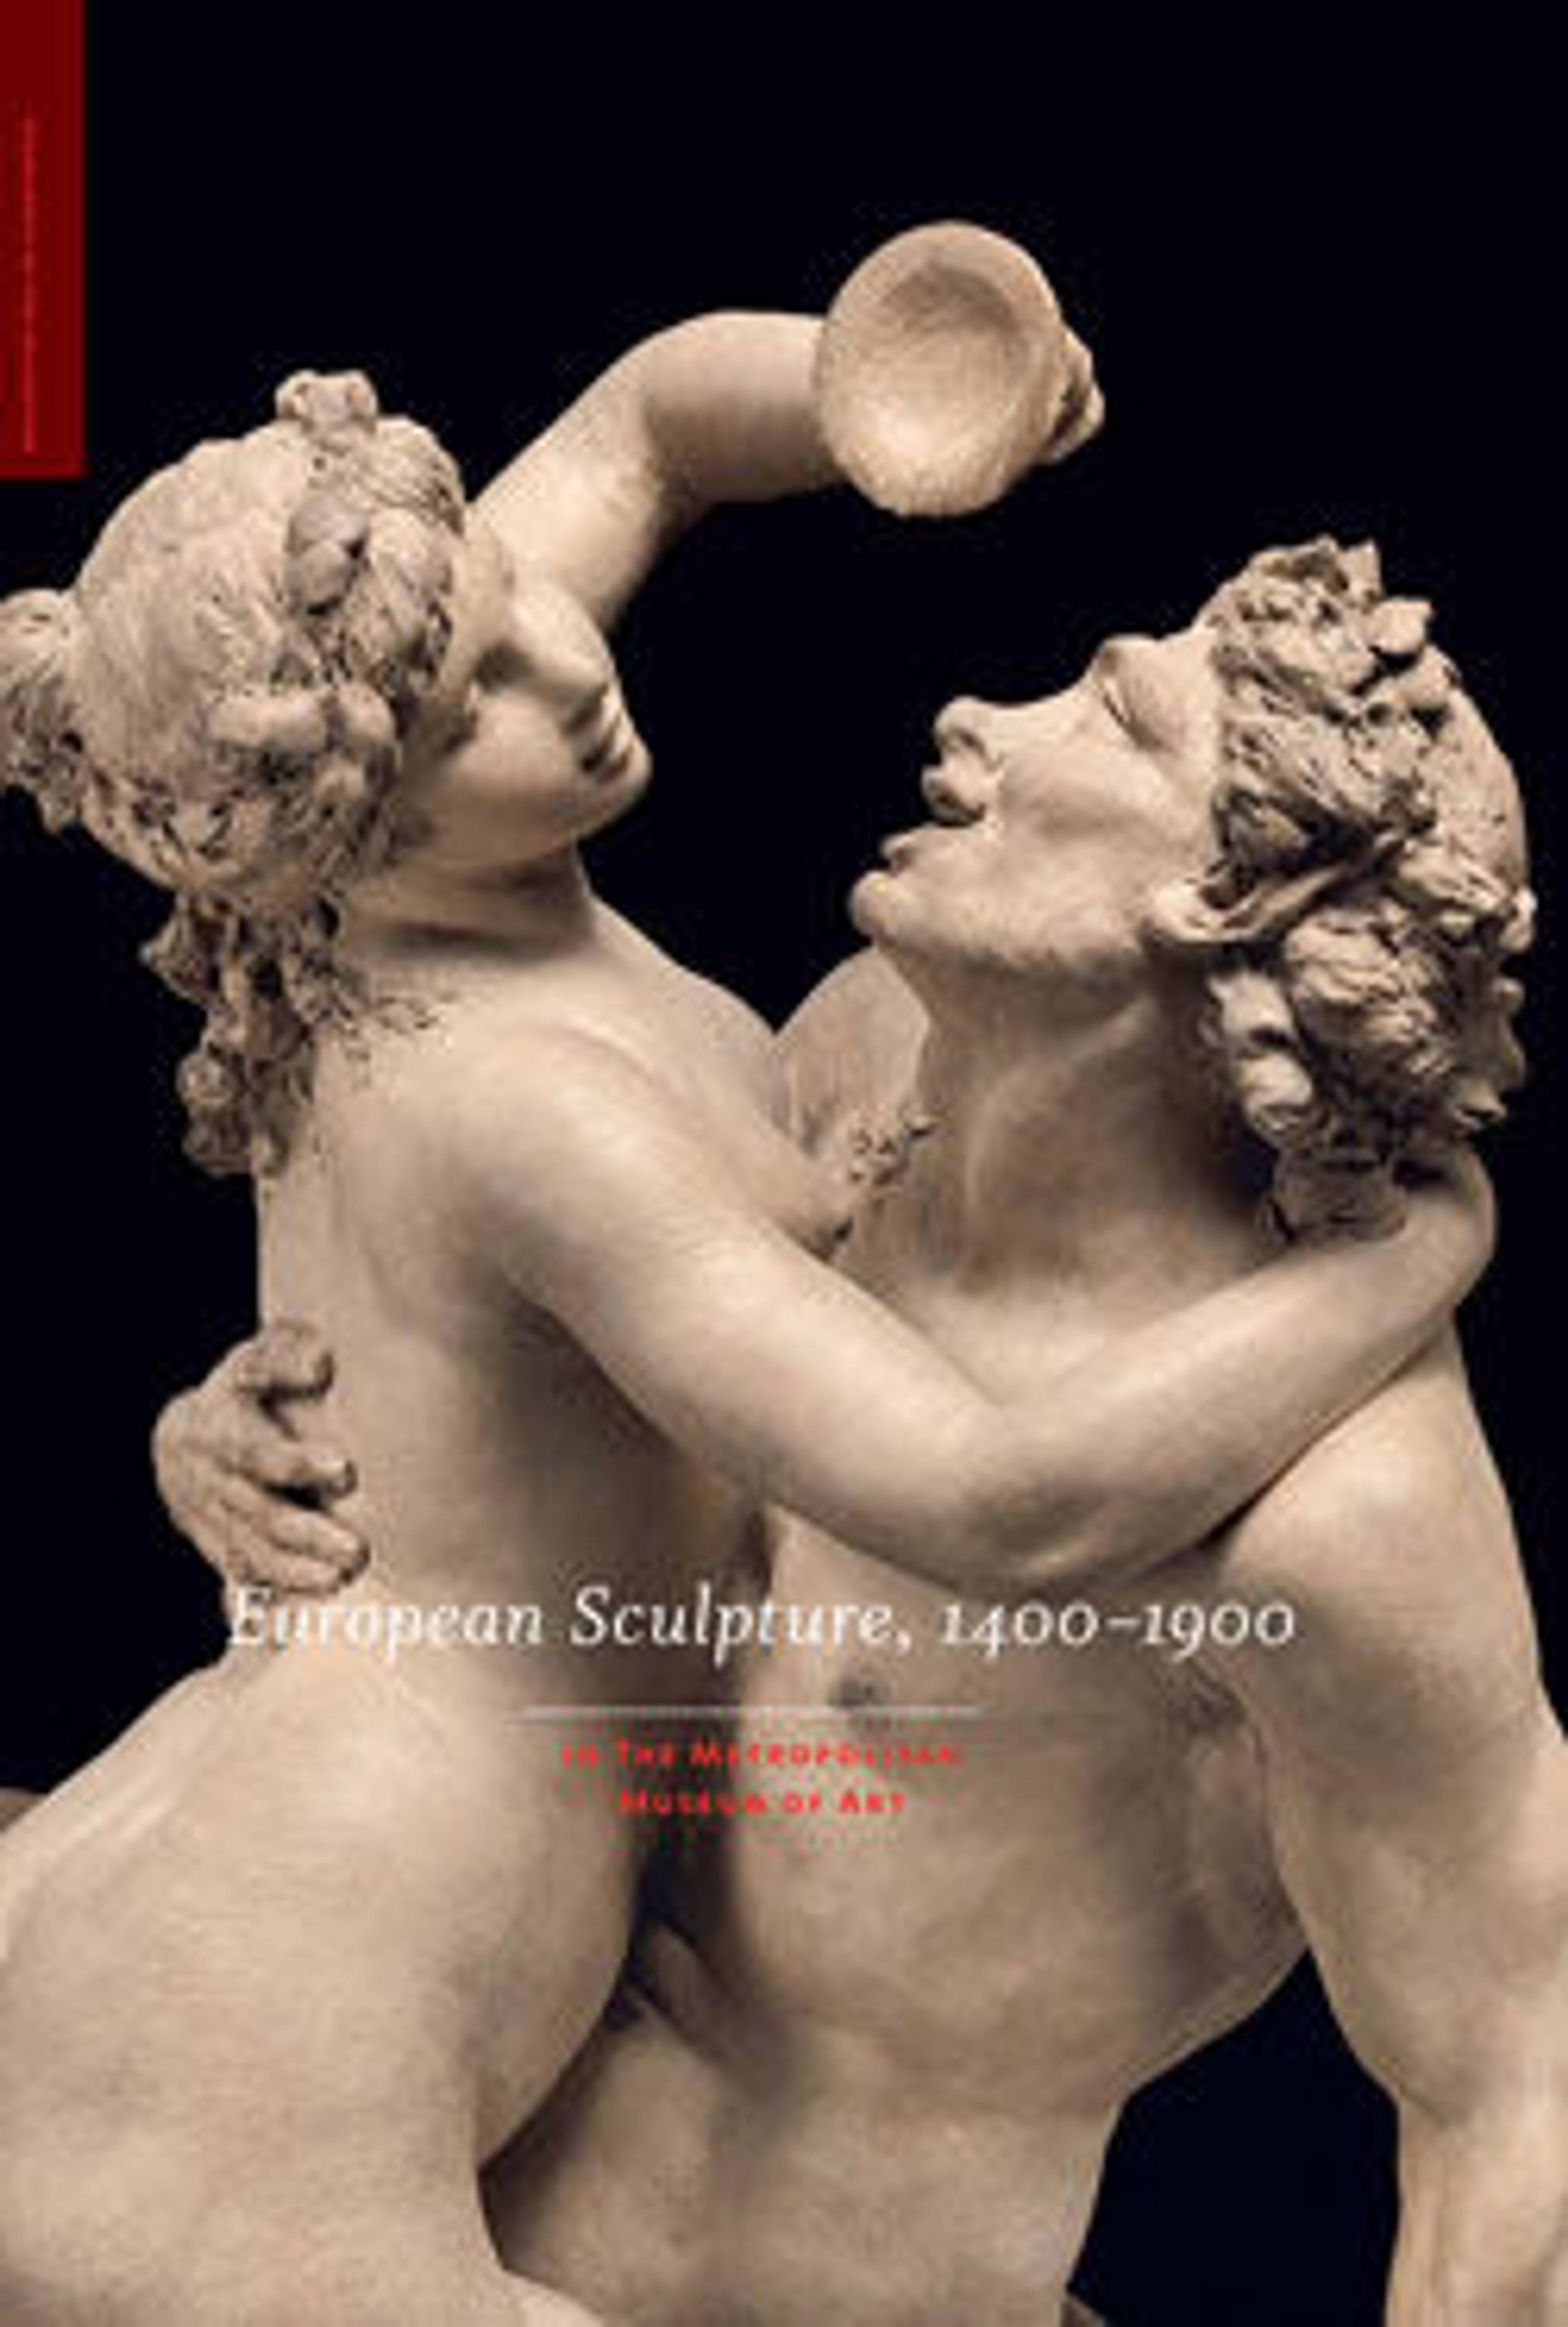 European Sculpture, 1400-1900, in The Metropolitan Museum of Art